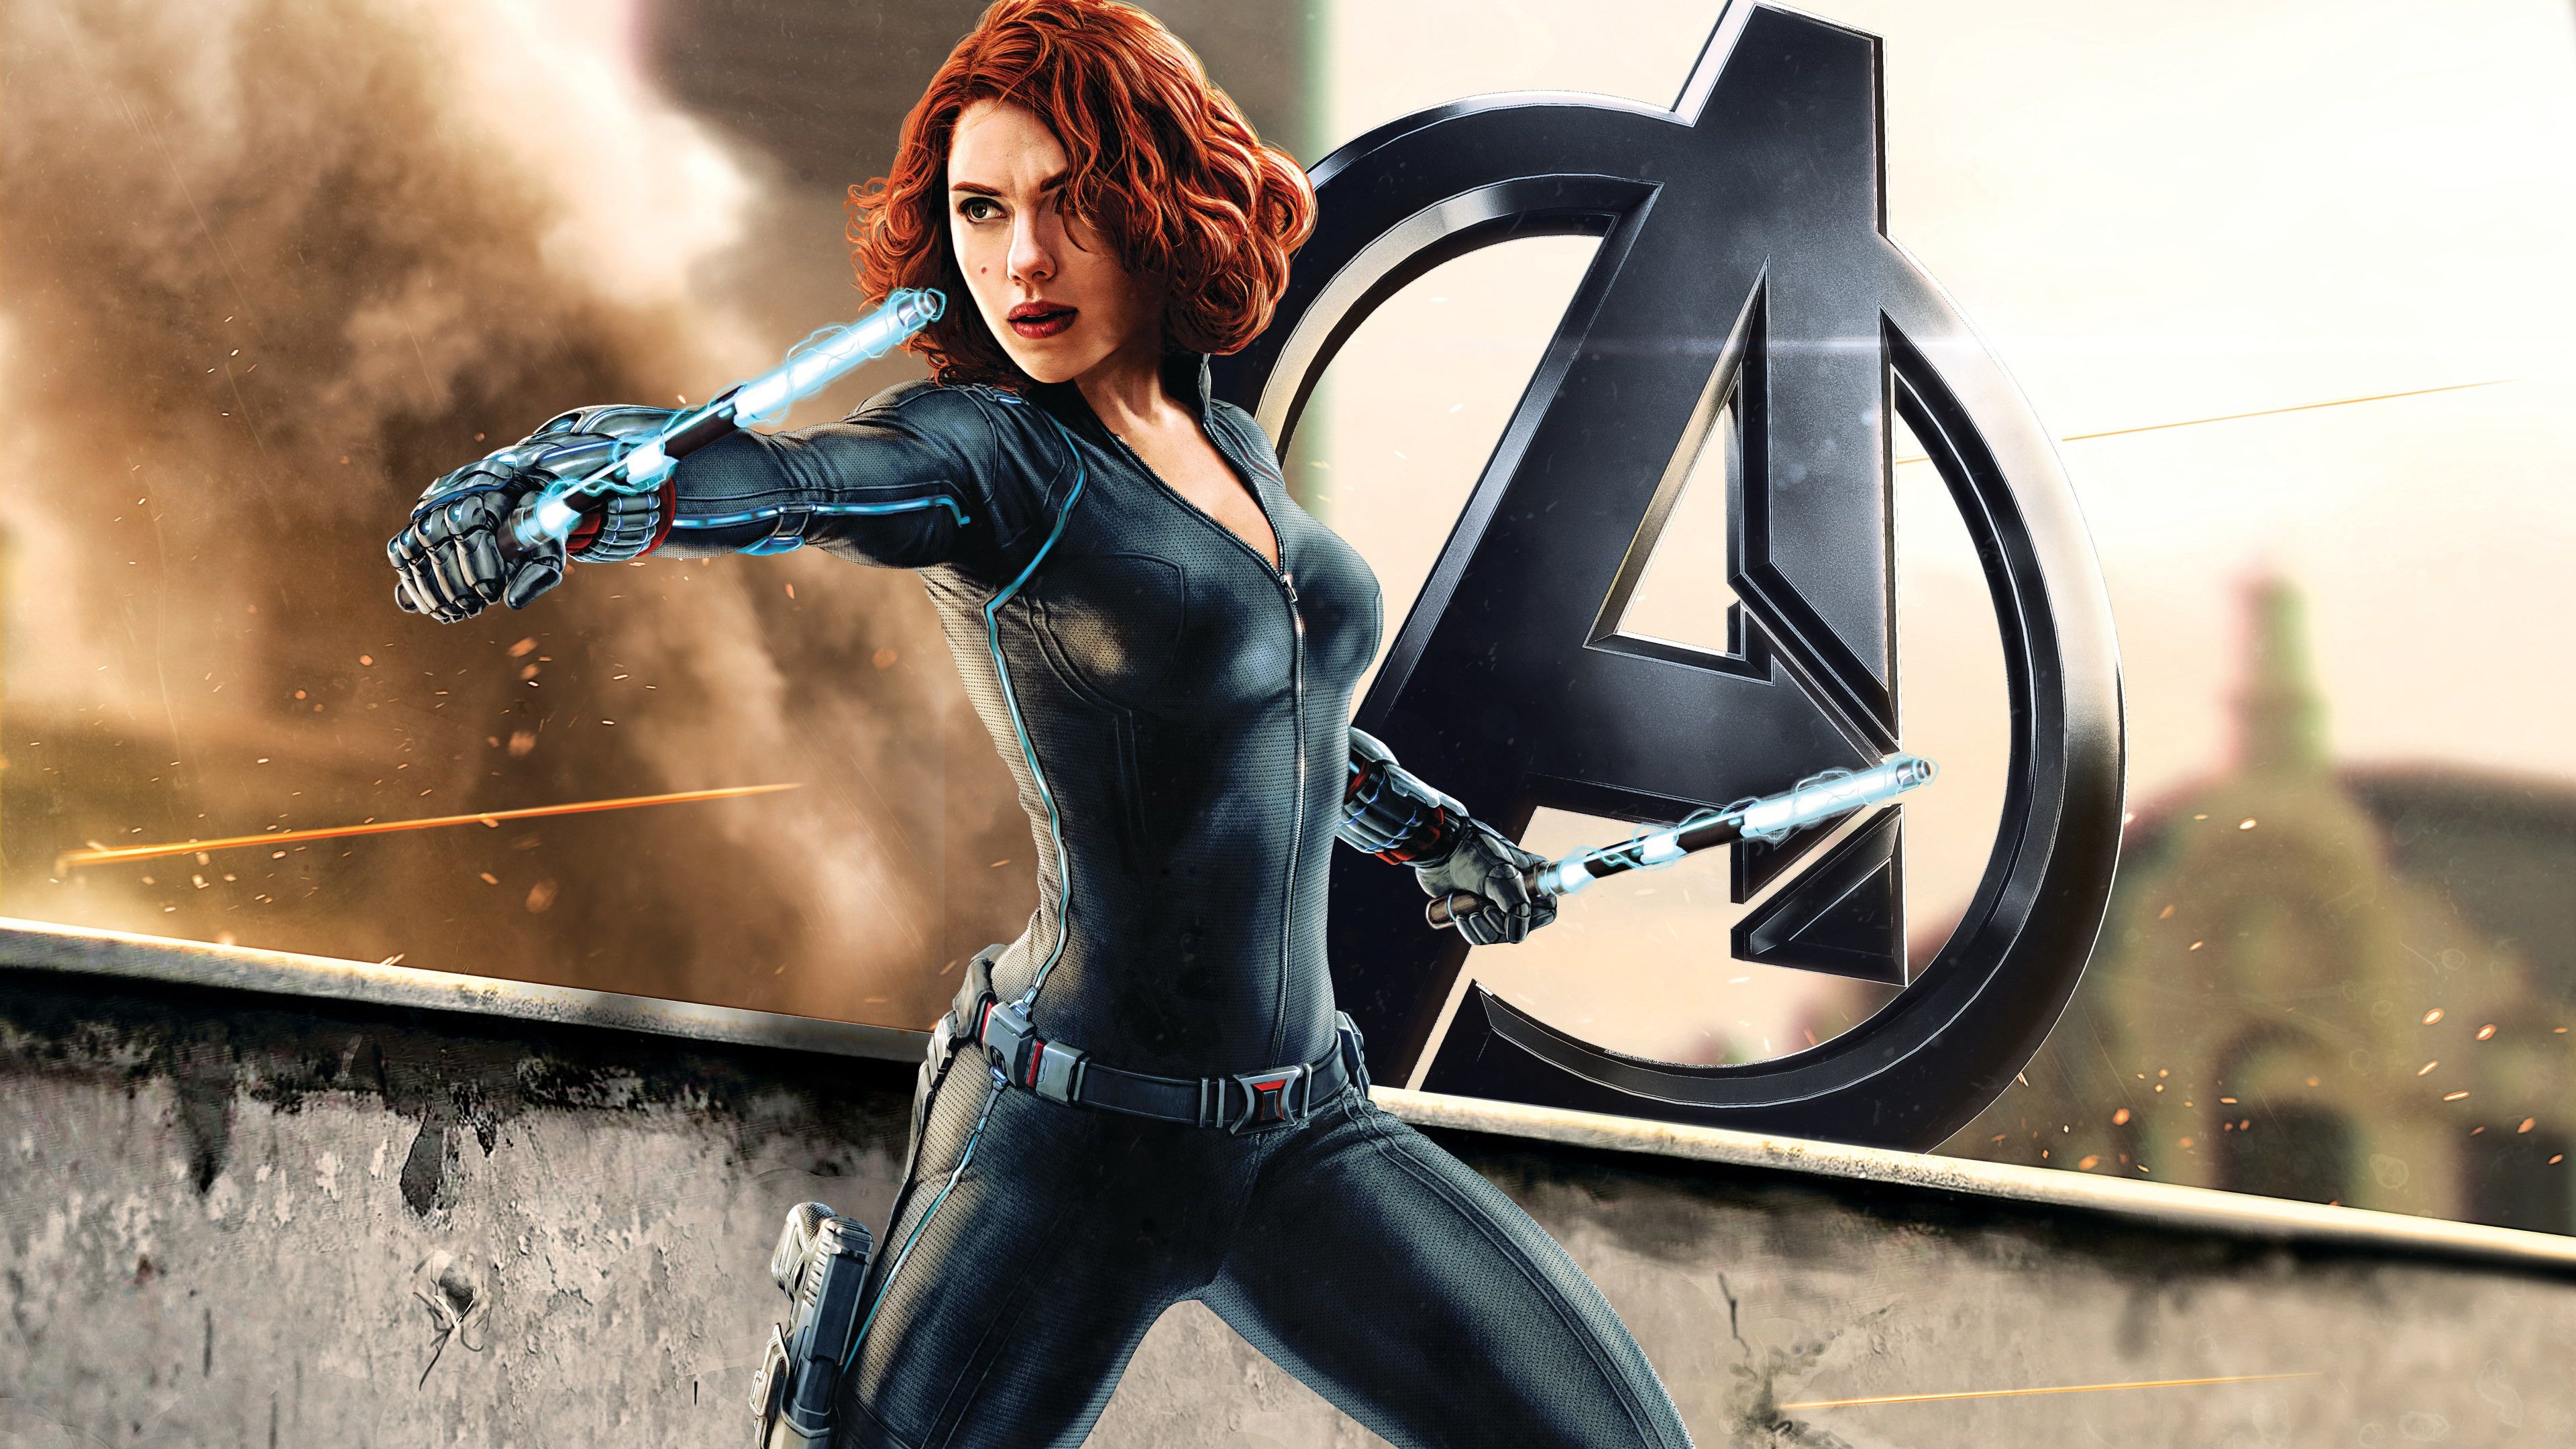 Download wallpaper: Black Widow in Avengers 3840x2160